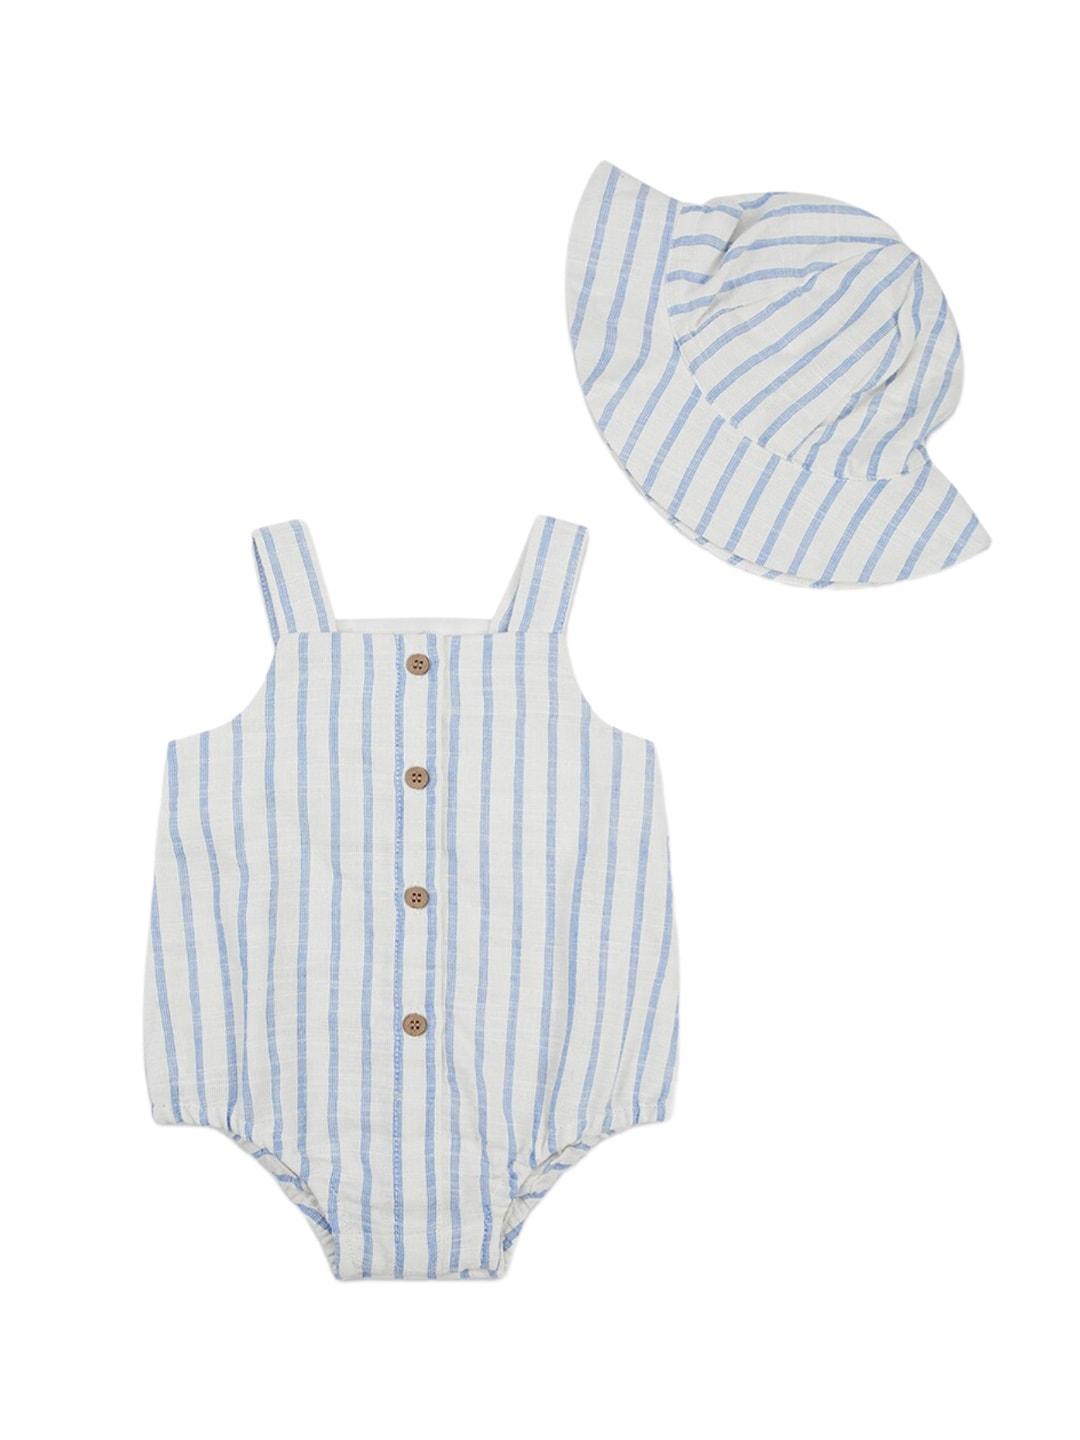 haus & kinder infants boys striped pure cotton romper with cap